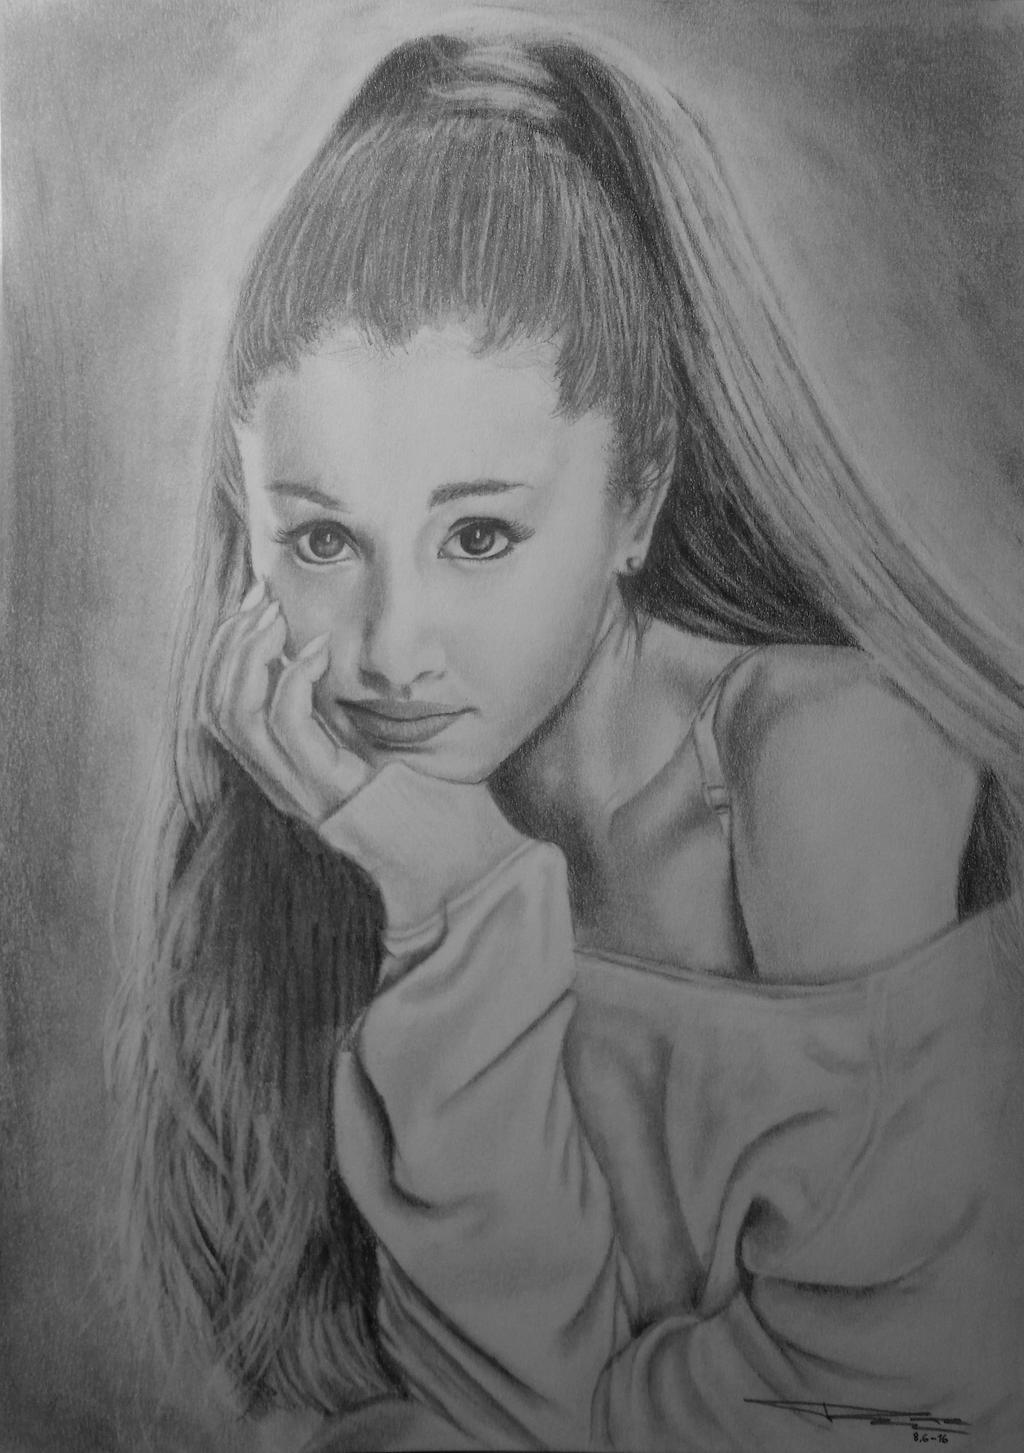 Ariana Grande pencil drawing by ArtDitional92 on DeviantArt